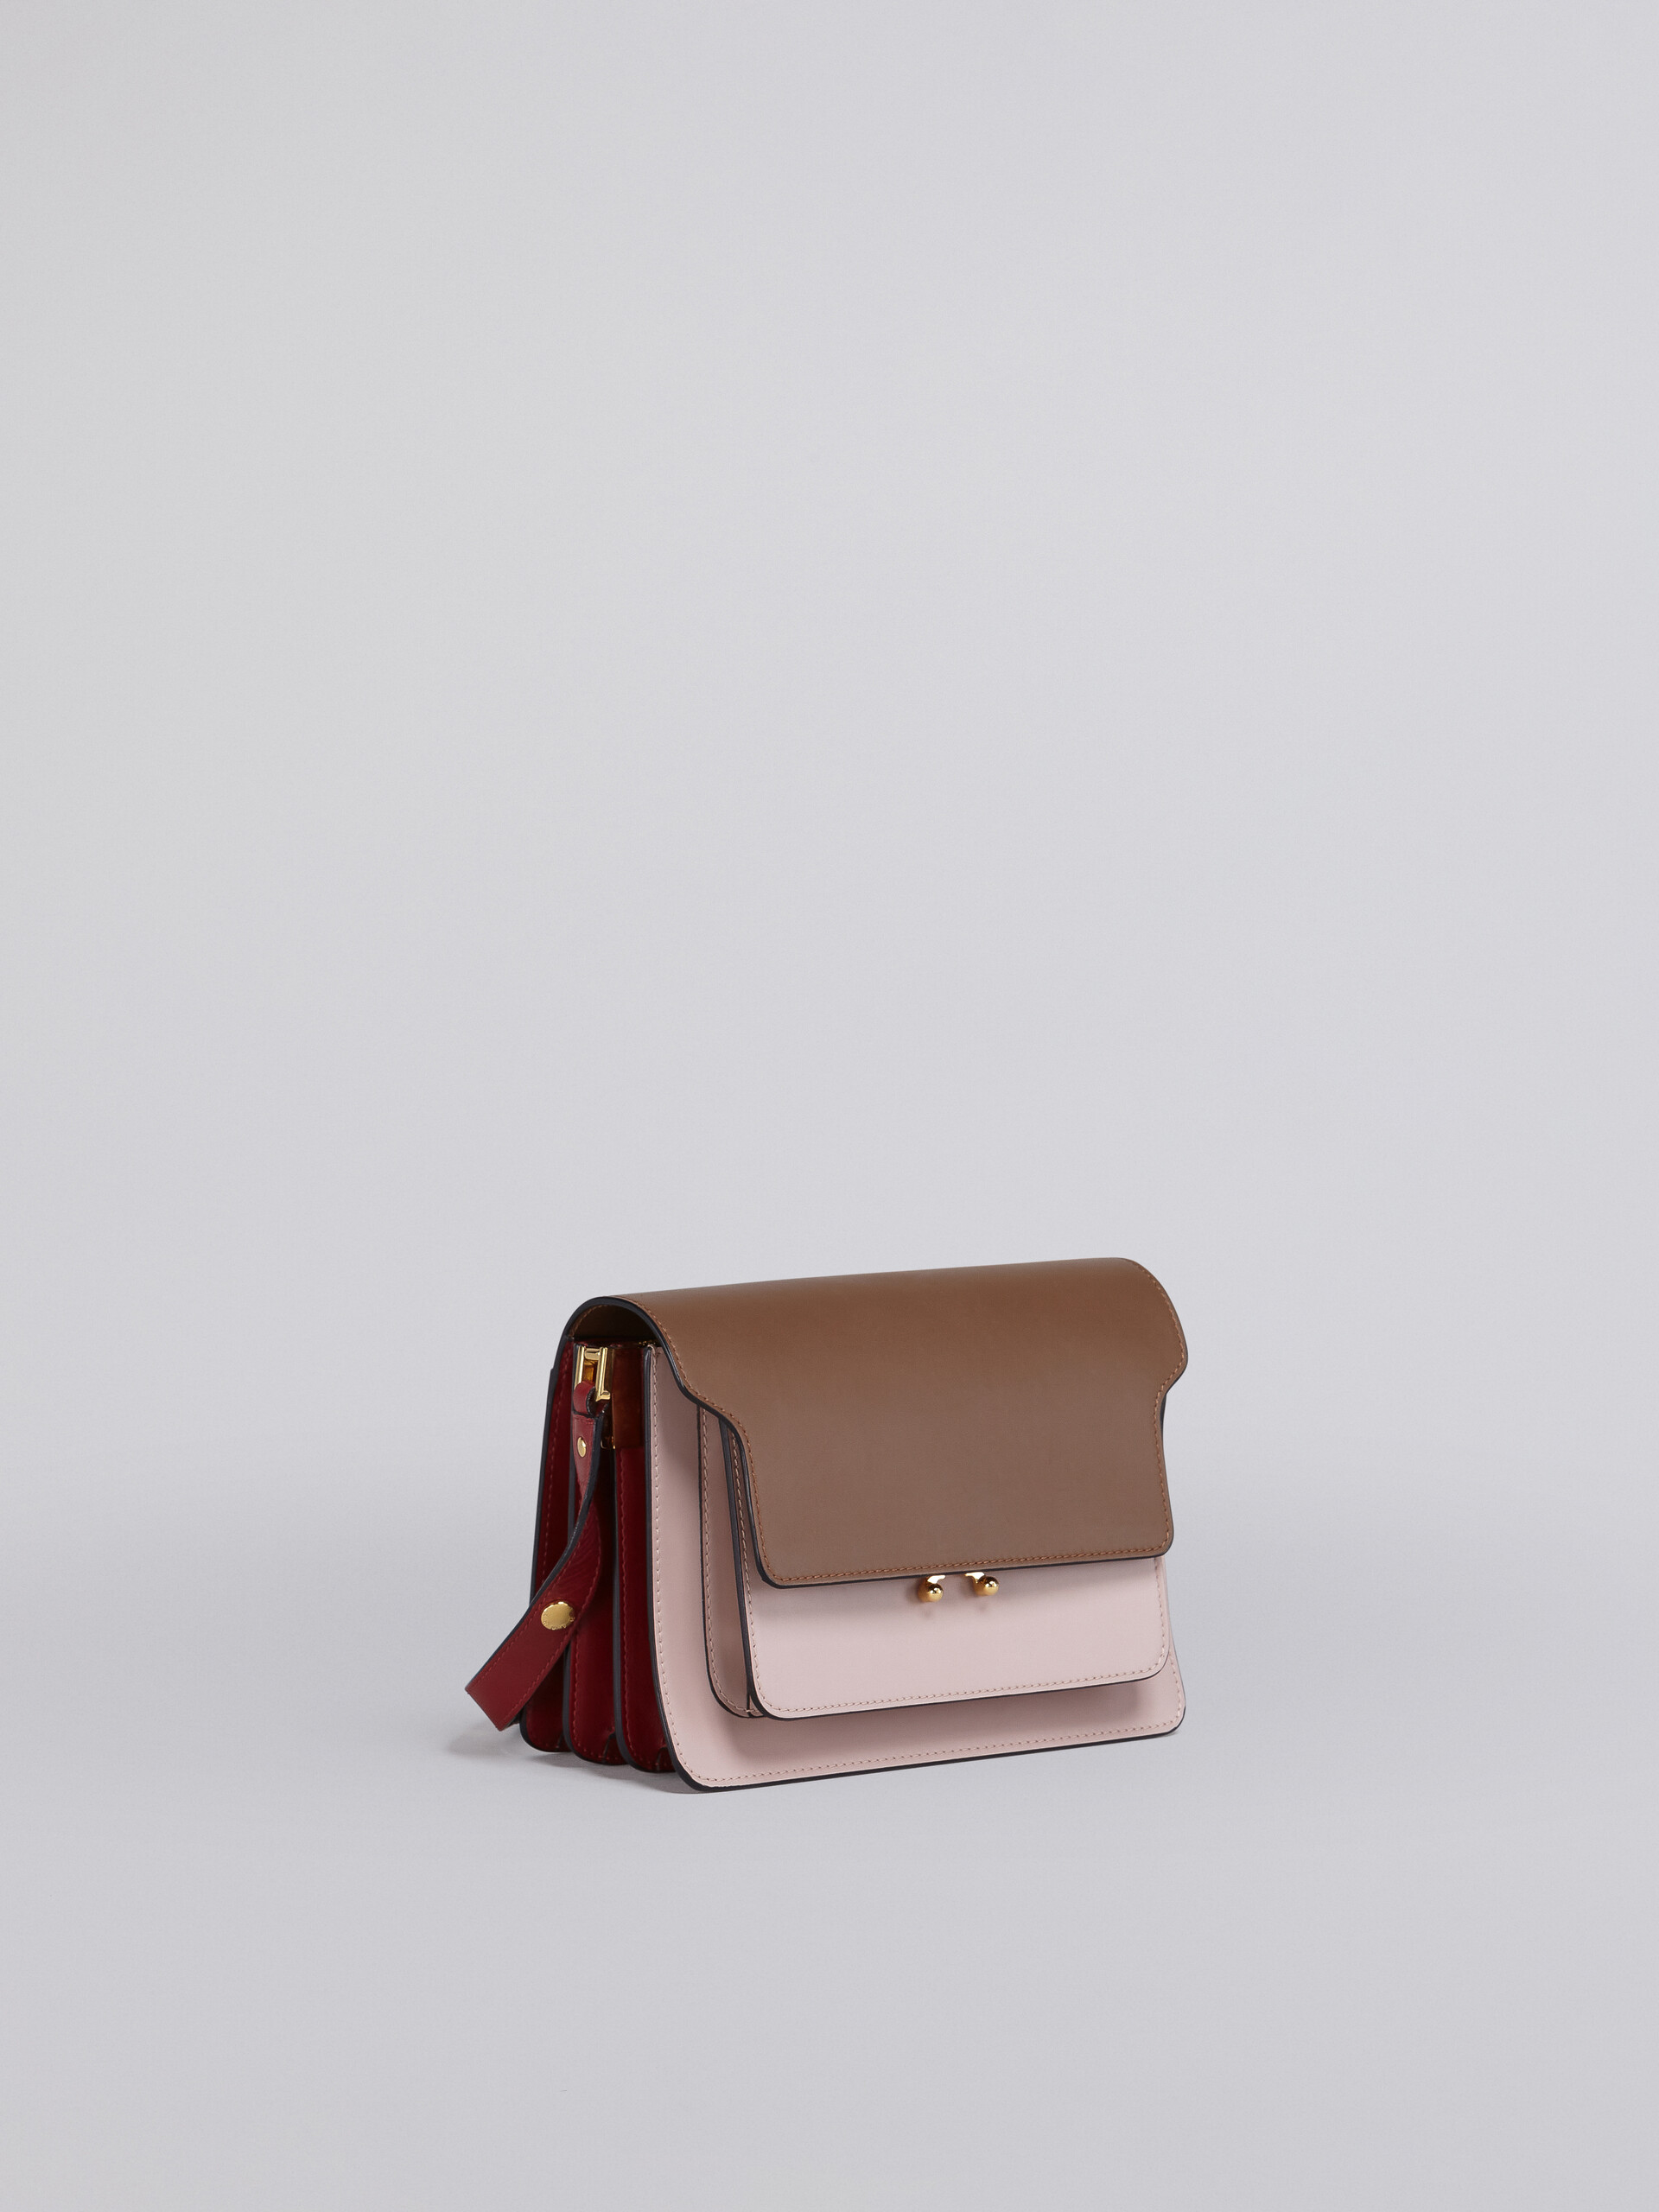 Marni Trunk Mini Leather Shoulder Bag in Brown